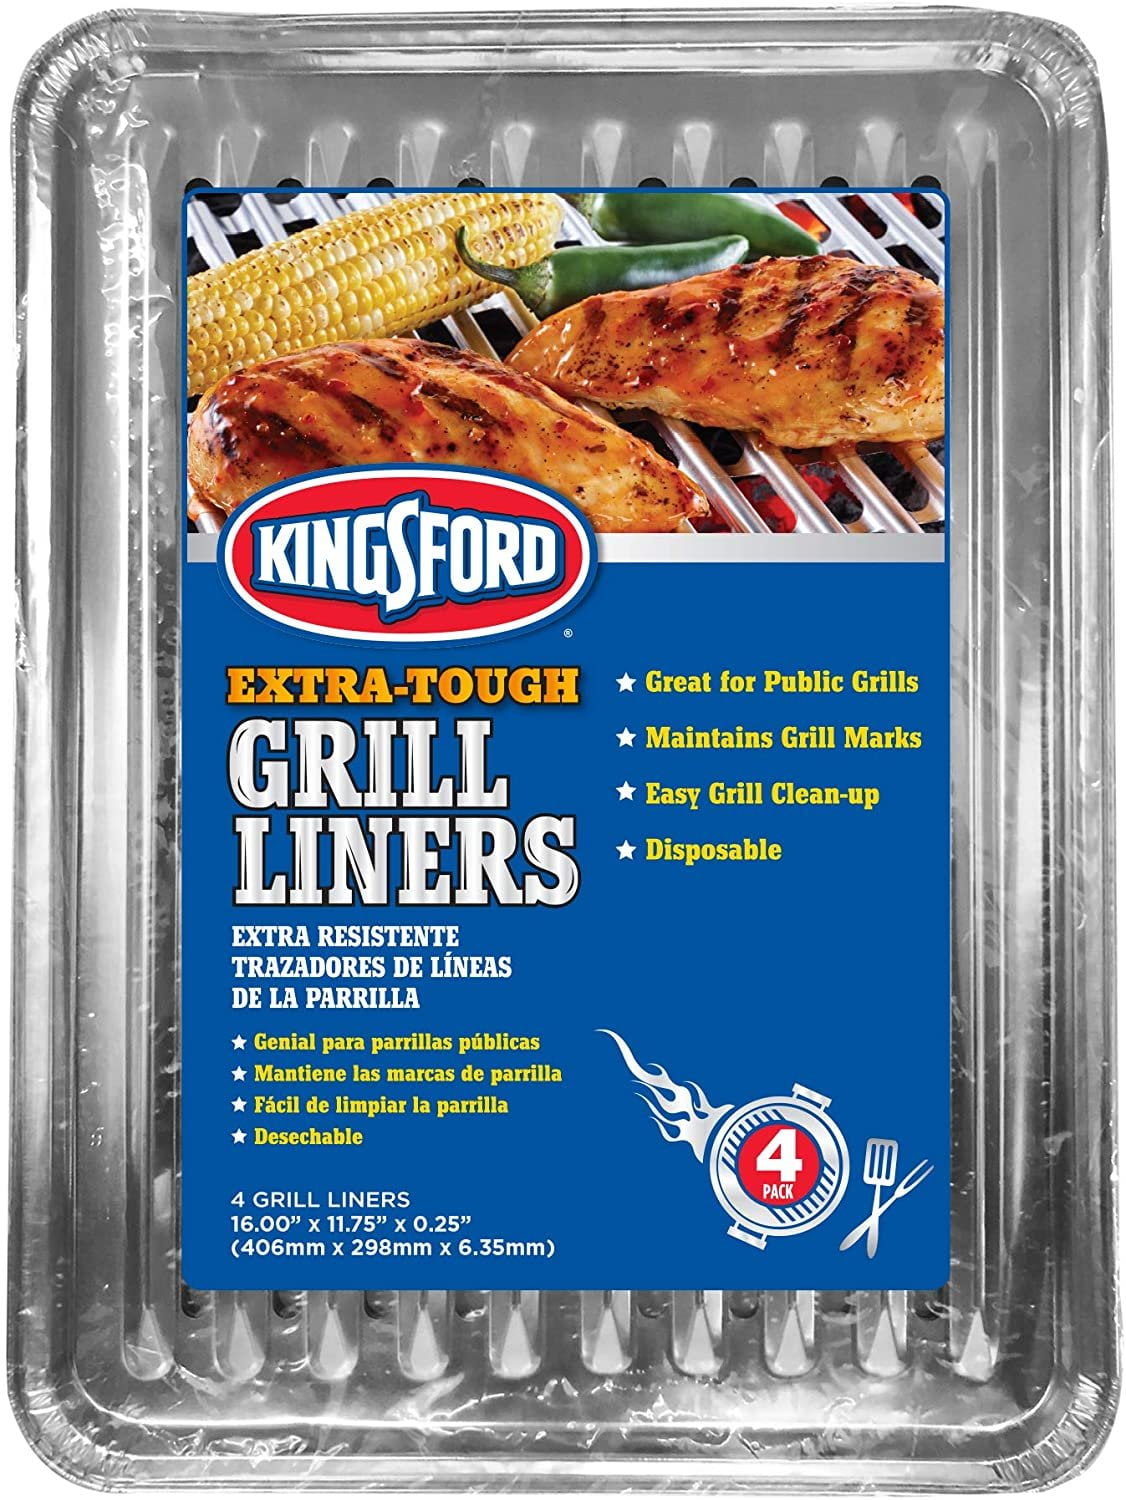  Kingsford Heavy Duty Aluminum Grilling Foil, Aluminum Foil for  Grilling, Cooking, Steaming, and Food Storage, Kingsford Grilling Foil,  Durable Aluminum Foil, Kingsford Foil